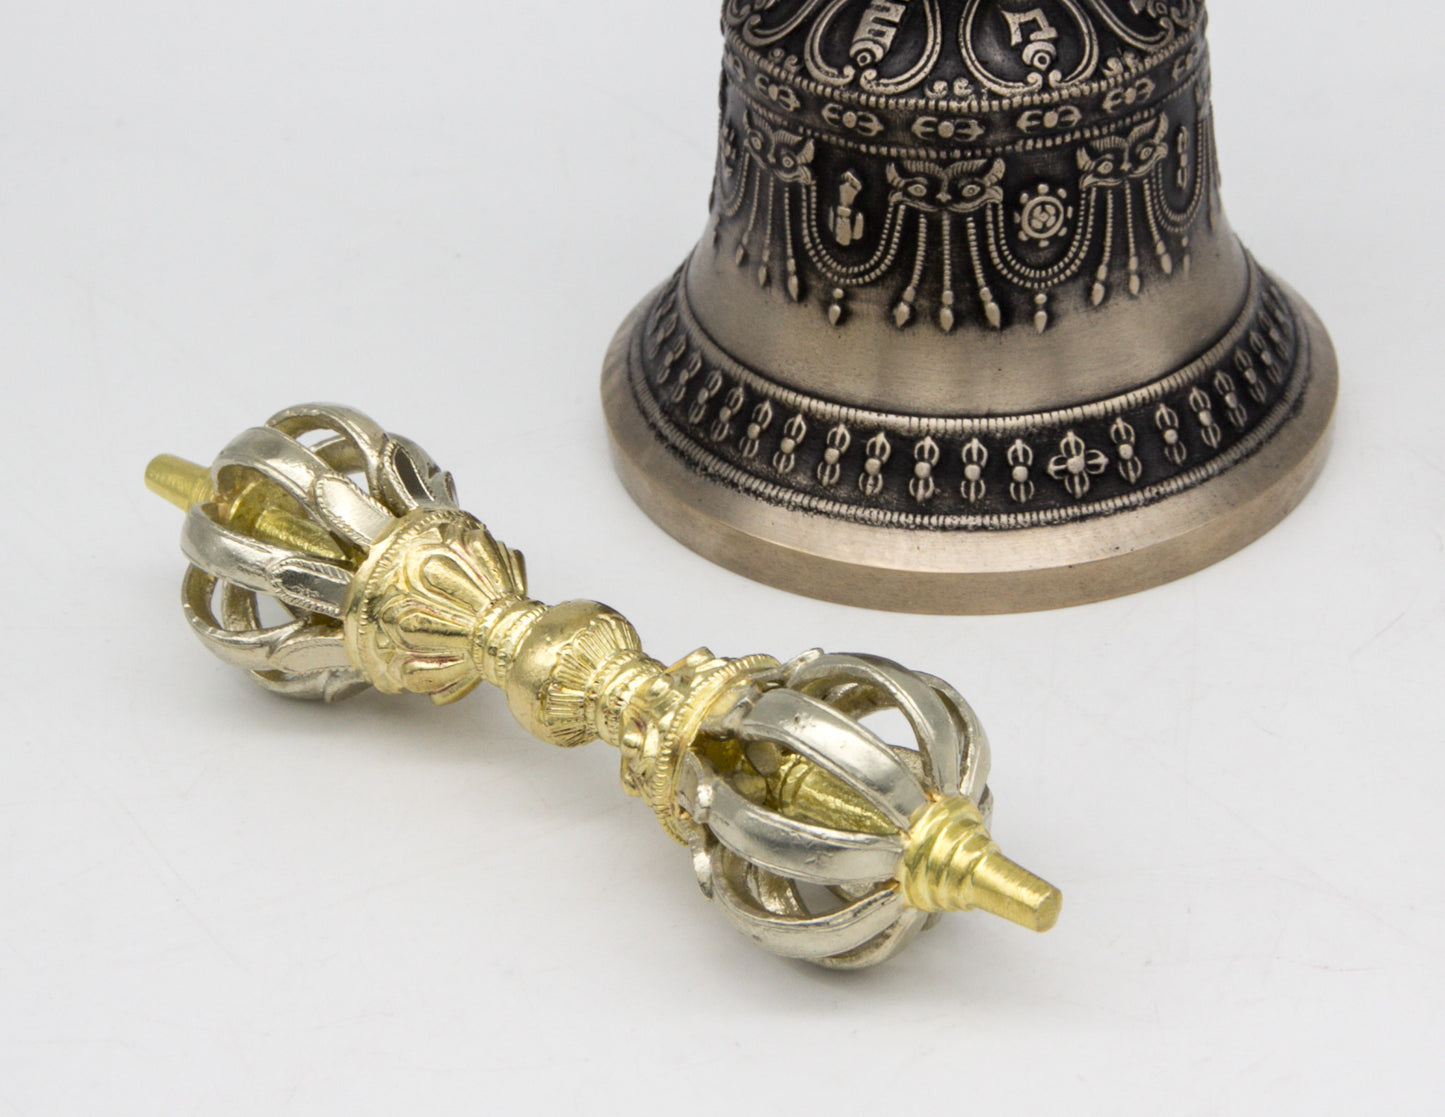 Hoch­qua­li­ta­tive Glocke & Dorje mit Gold- und Silberkontrast – Standard